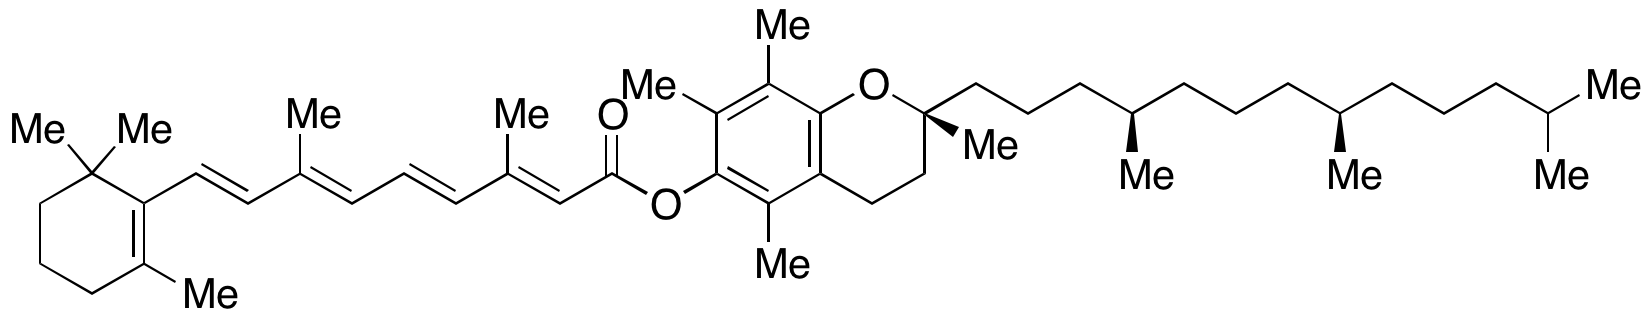 d-α-Tocopheryl Retinoate